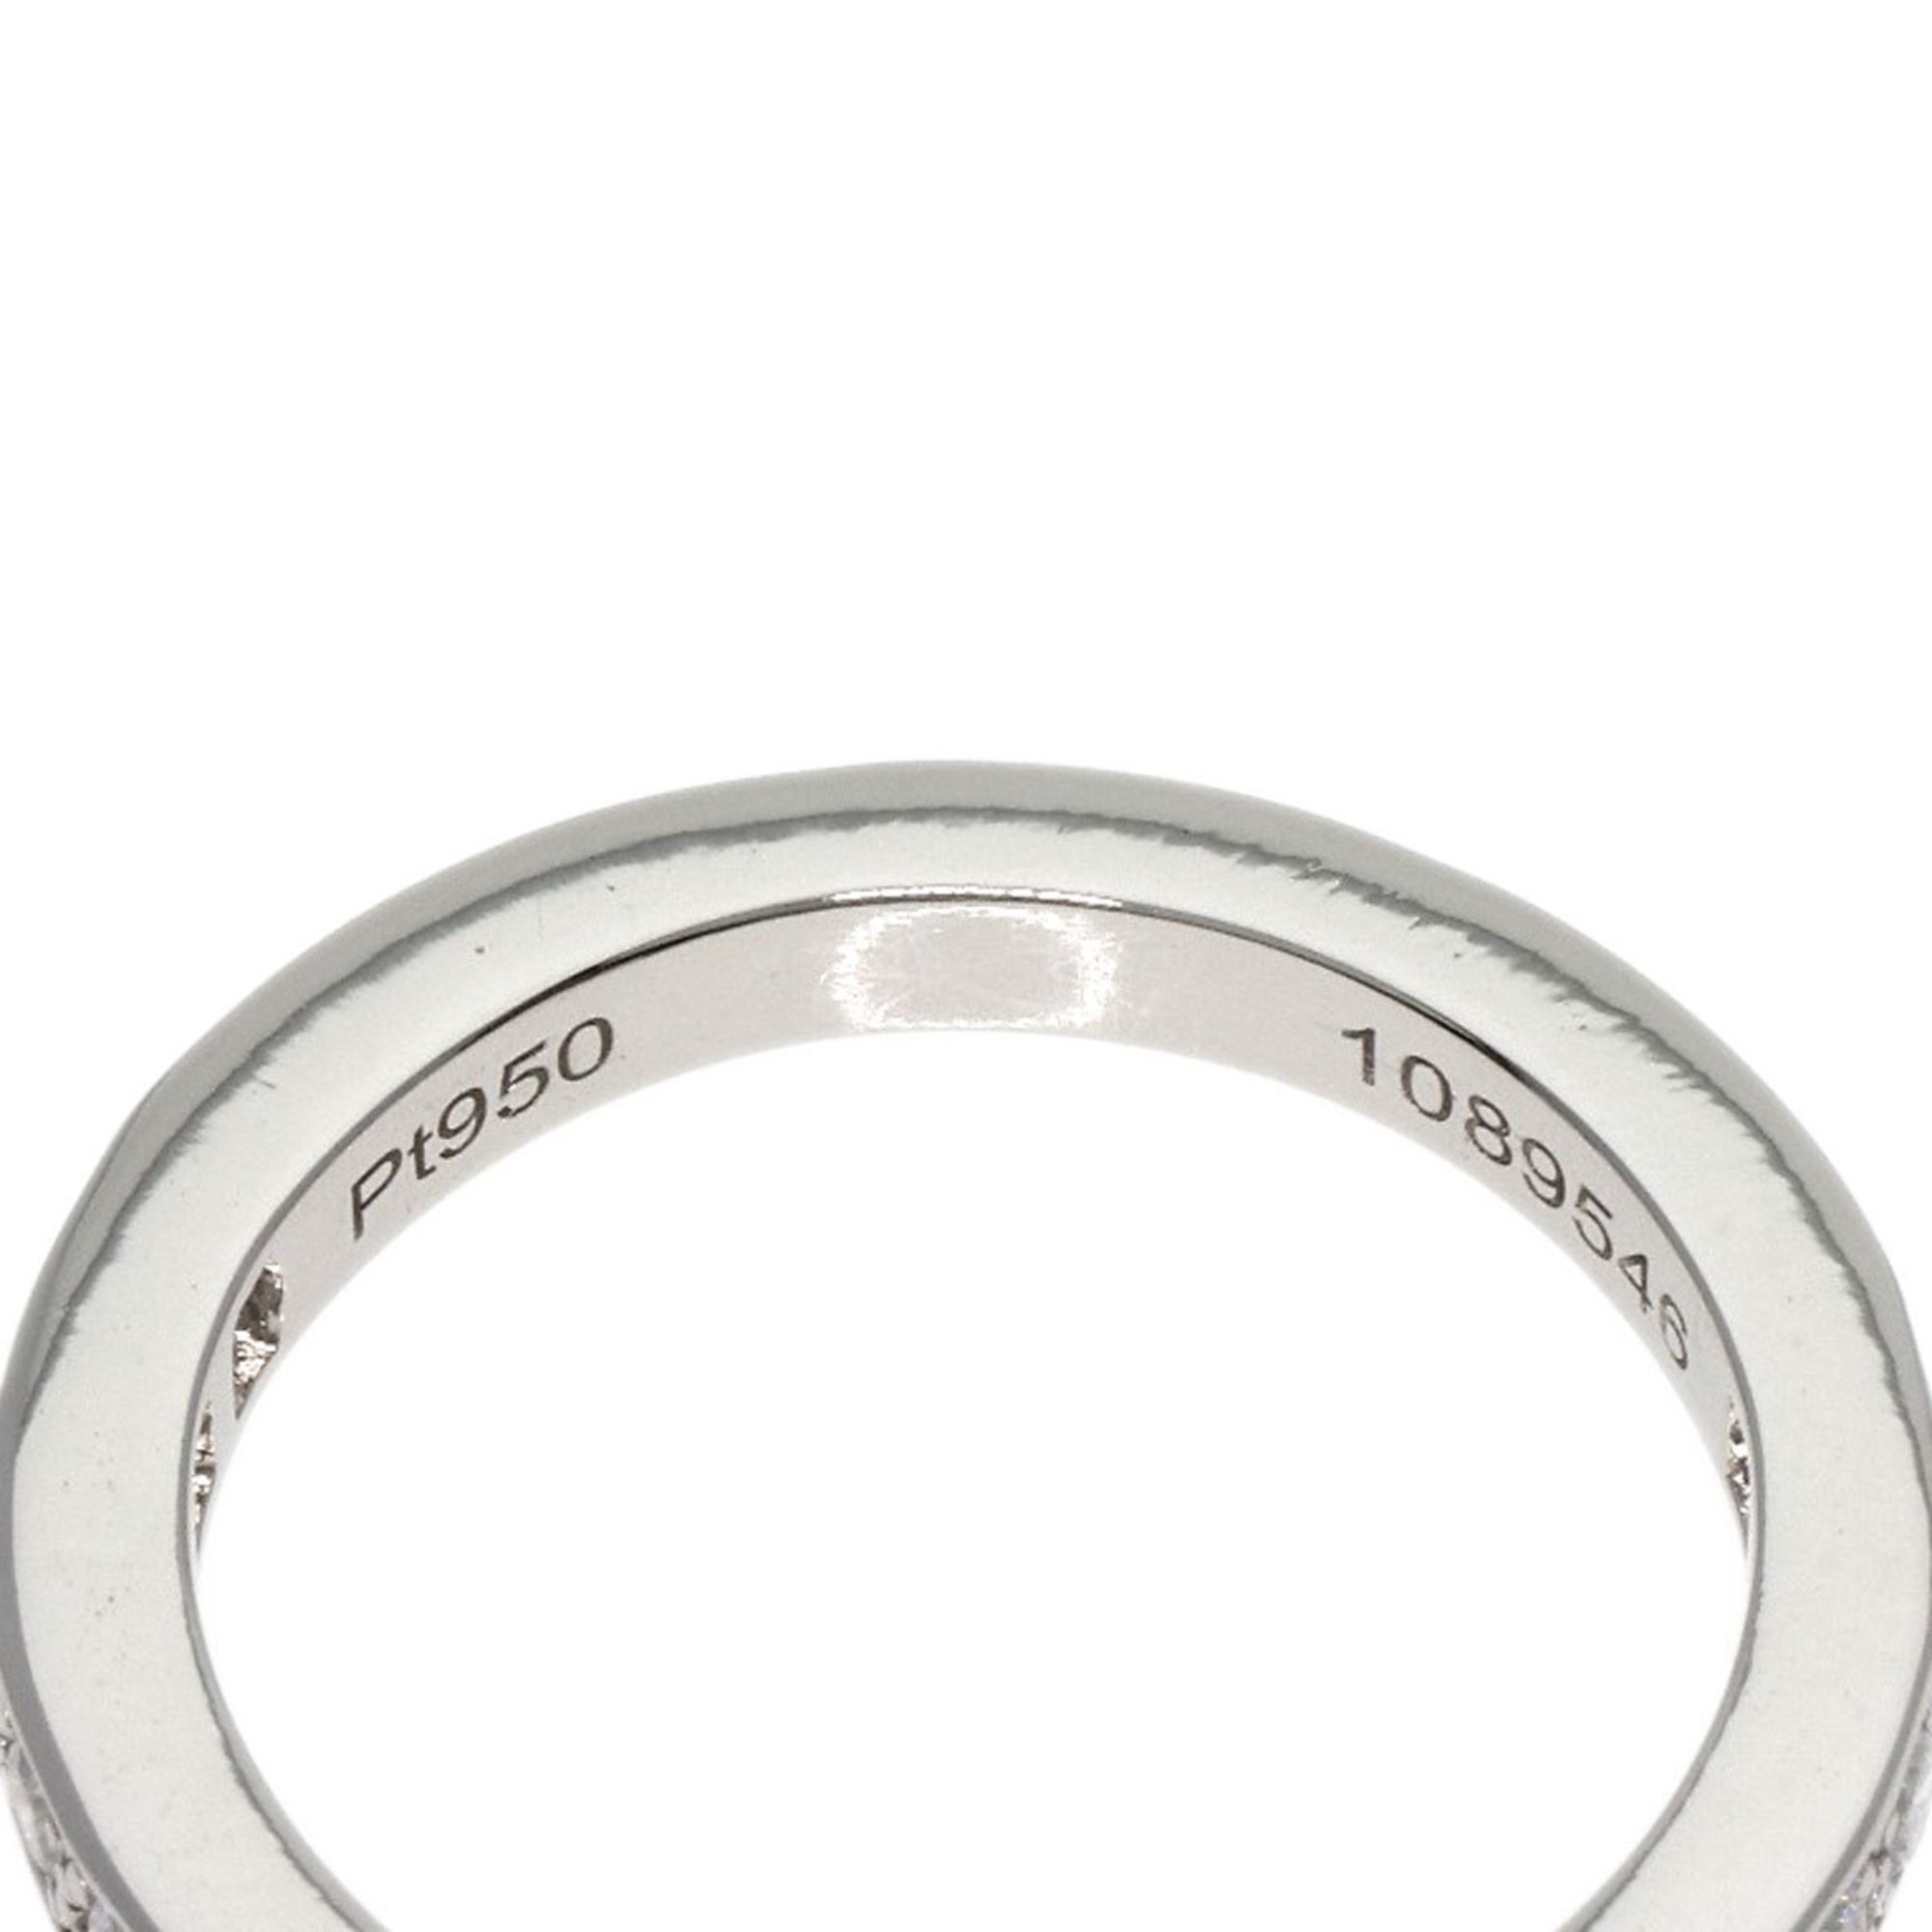 Chaumet Frison Half Eternity Diamond Ring, Platinum PT950, Women's